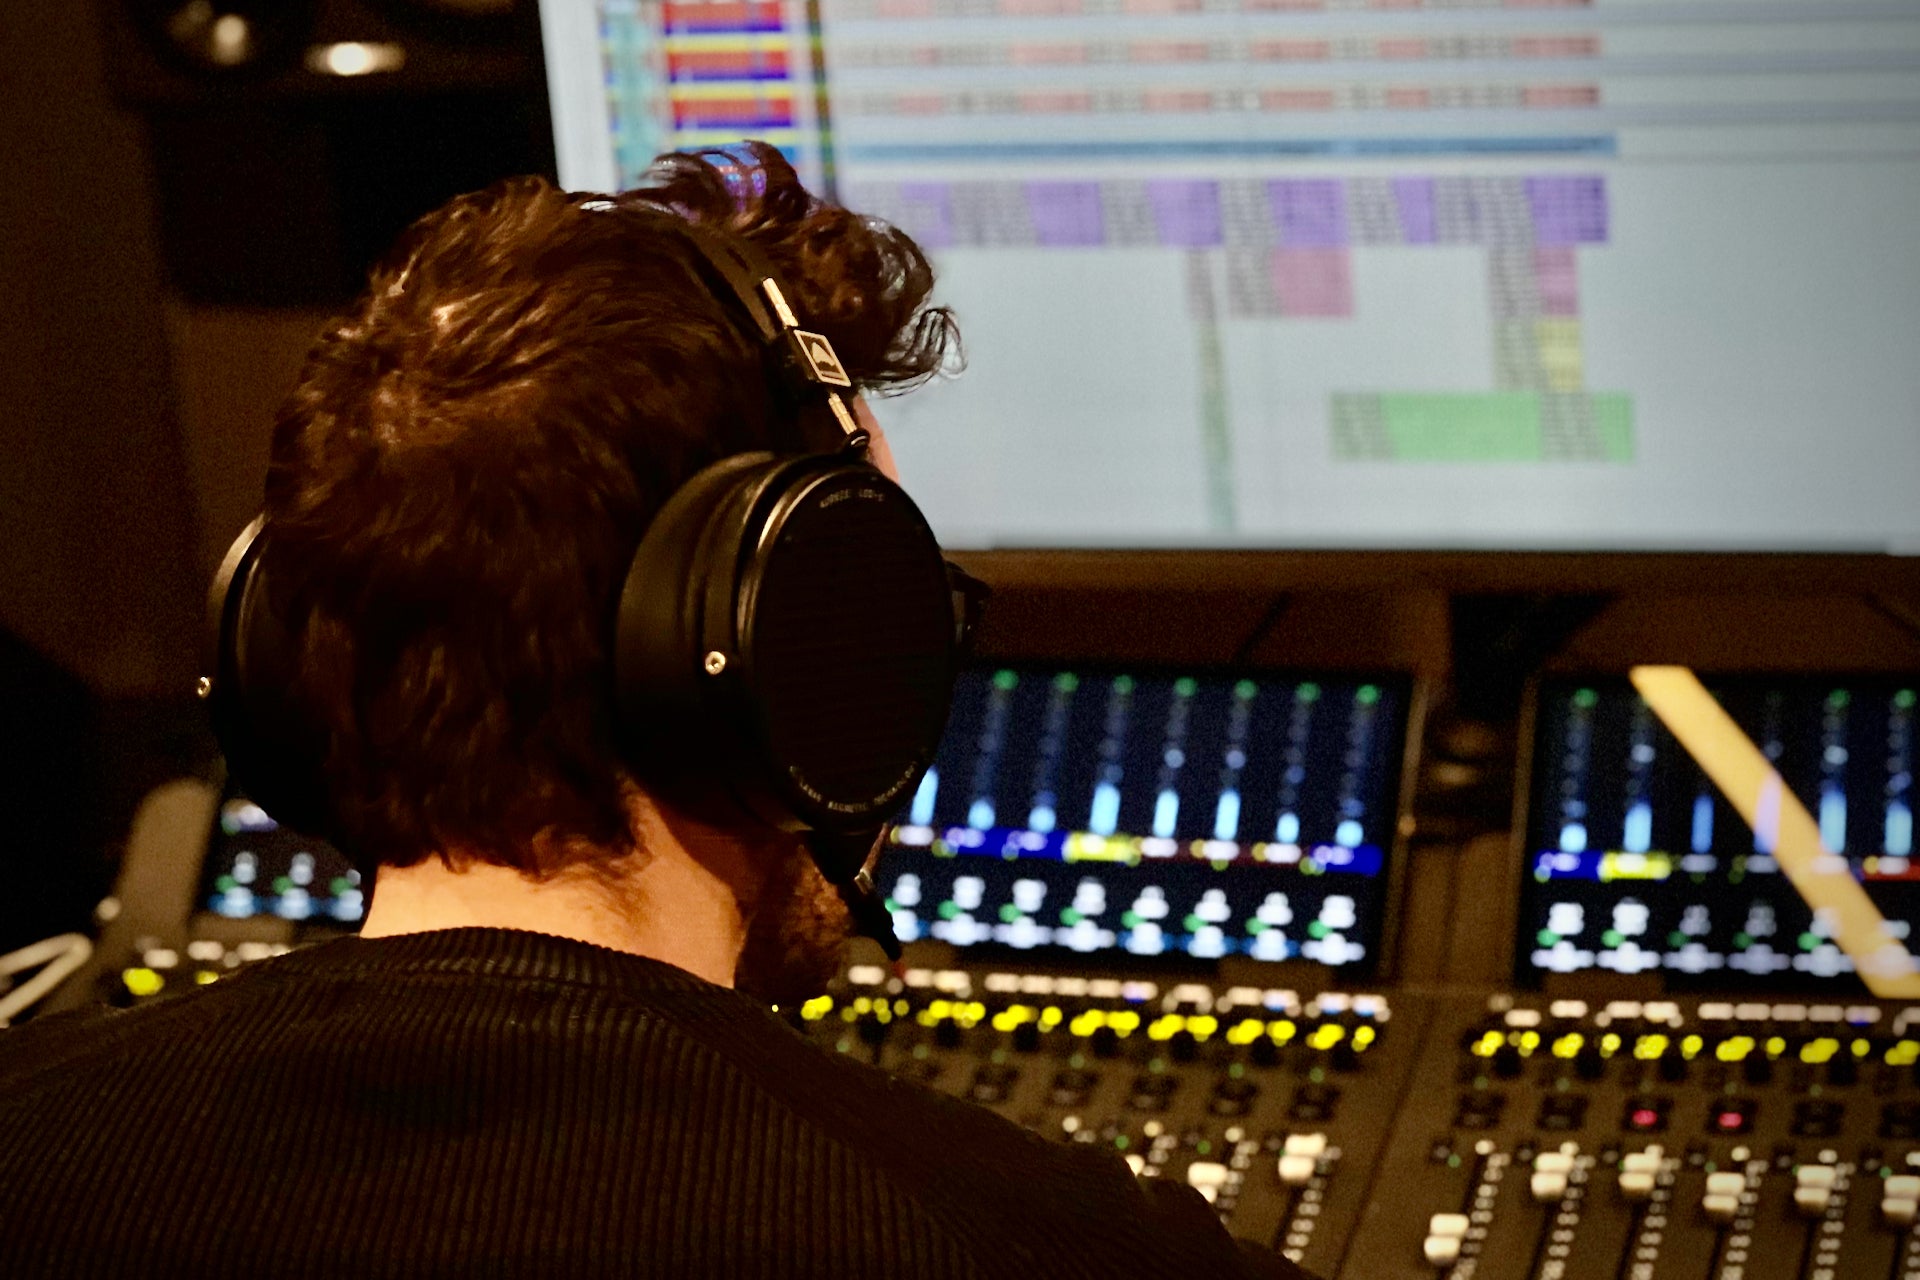 Pierpaolo Demarchi in the studio with his Audeze LCD-X headphones